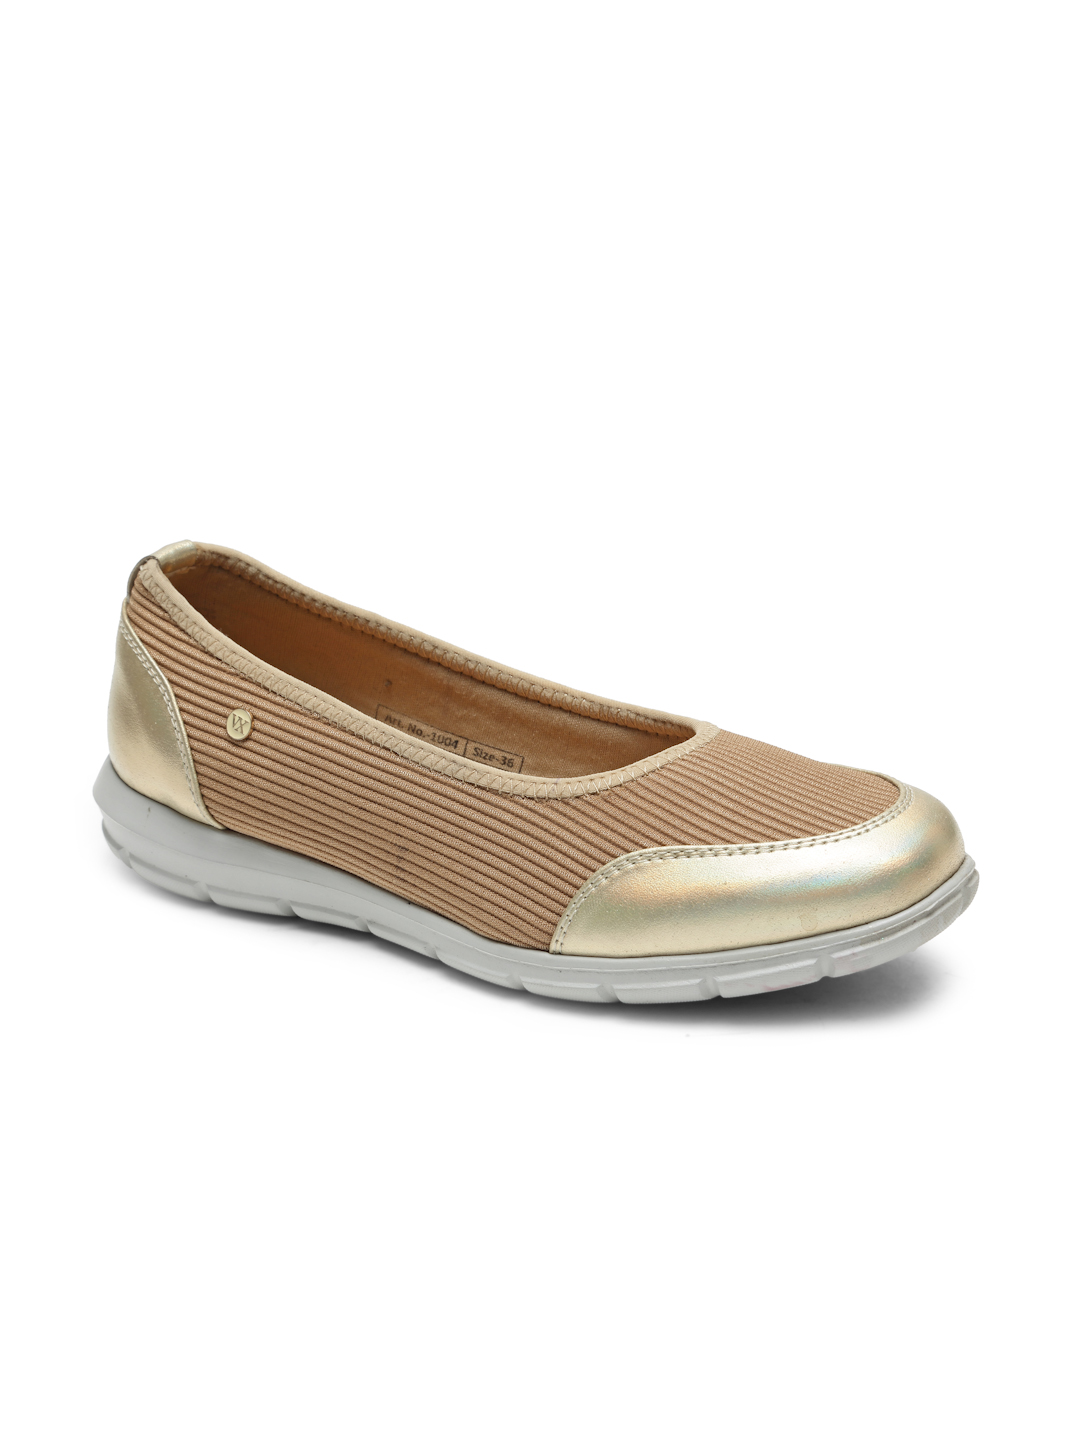 Buy Von Wellx Germany Comfort Women's Beige Casual Shoes Alice Online in Sri Lanka